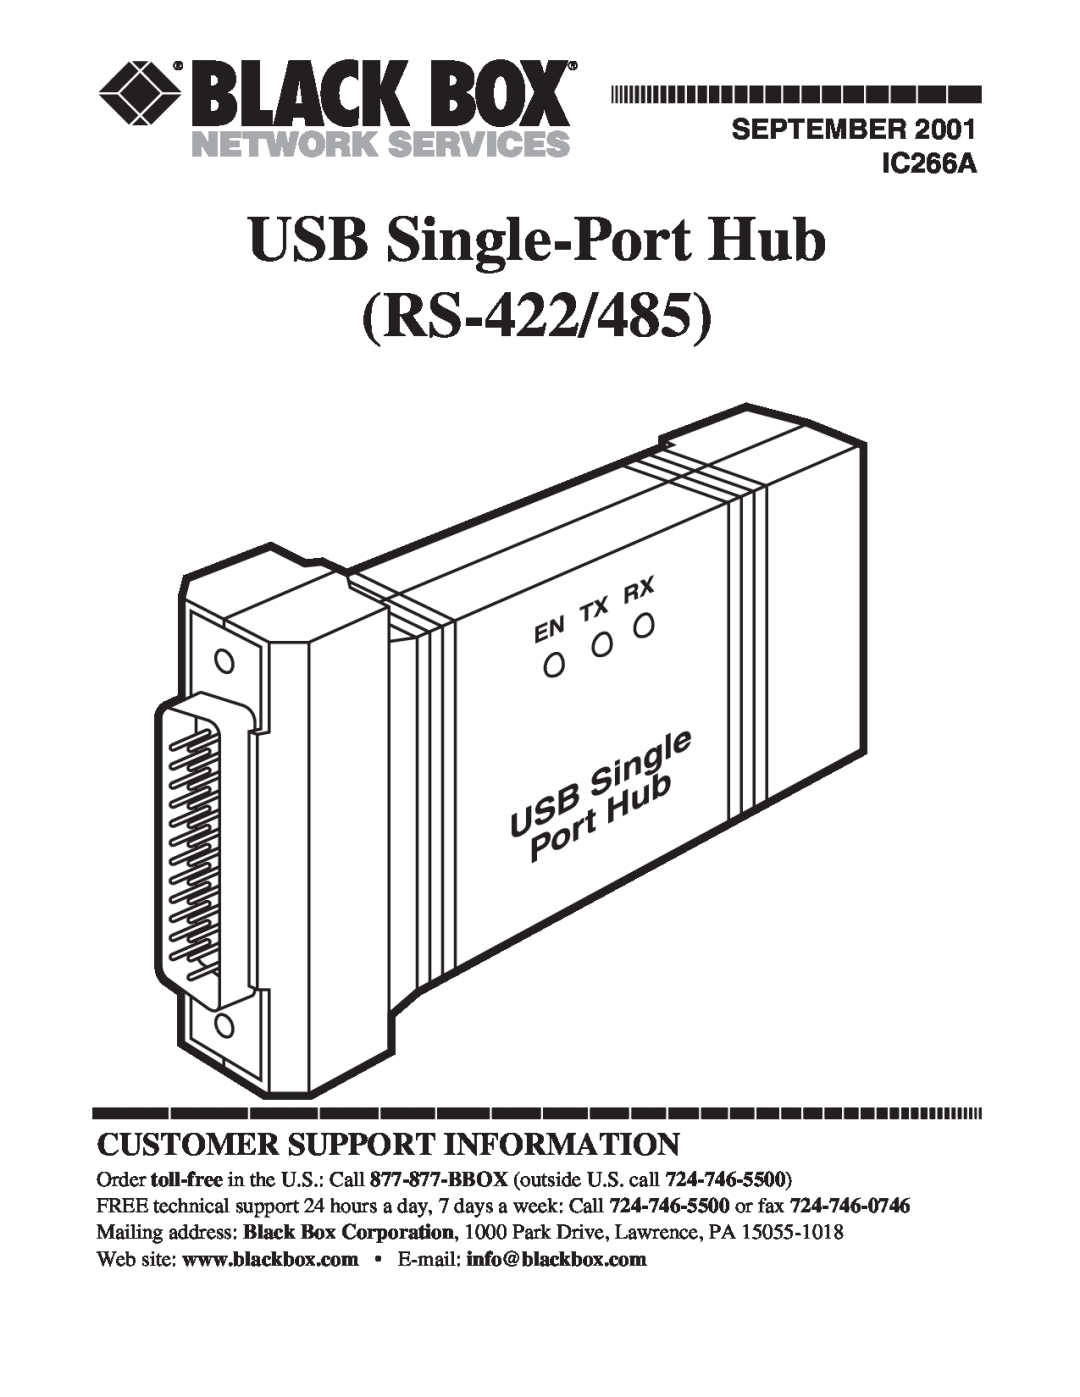 Black Box manual USB Single-Port Hub RS-422/485, Customer Support Information, SEPTEMBER IC266A 